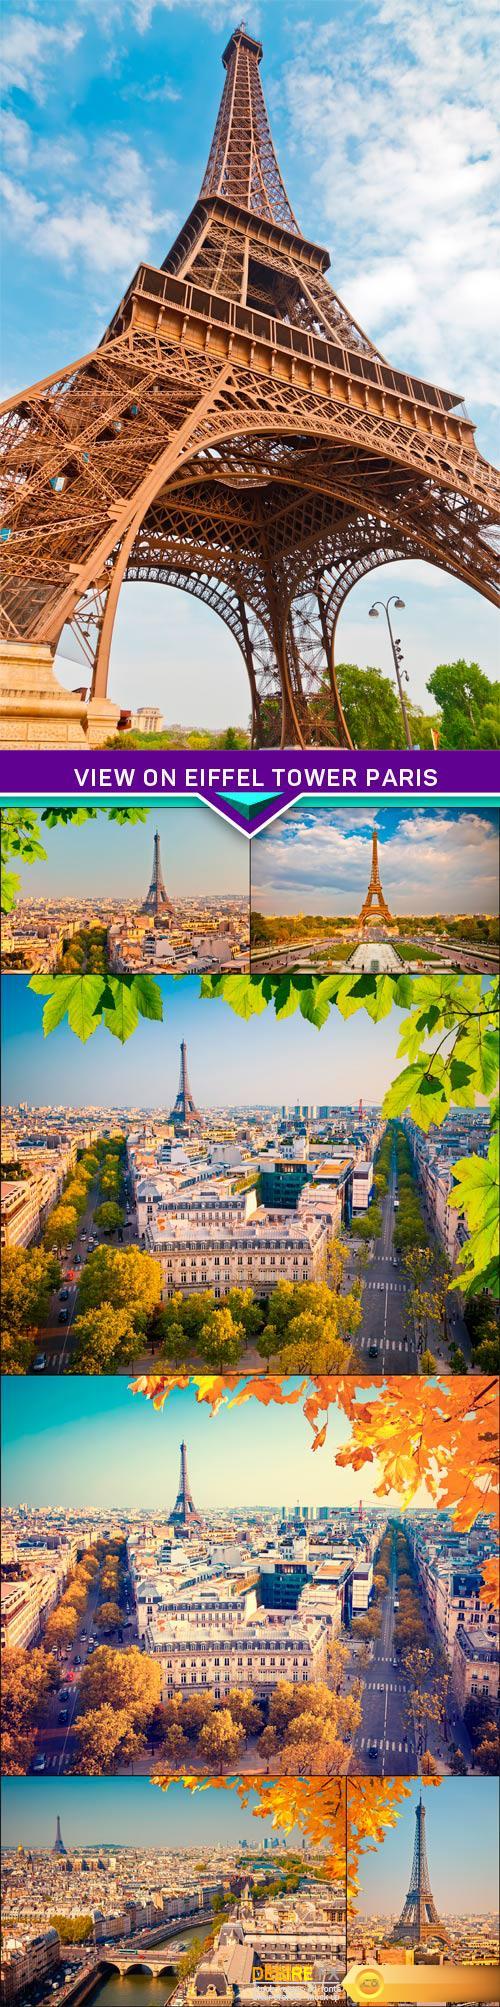 View on Eiffel tower Paris 7X JPEG